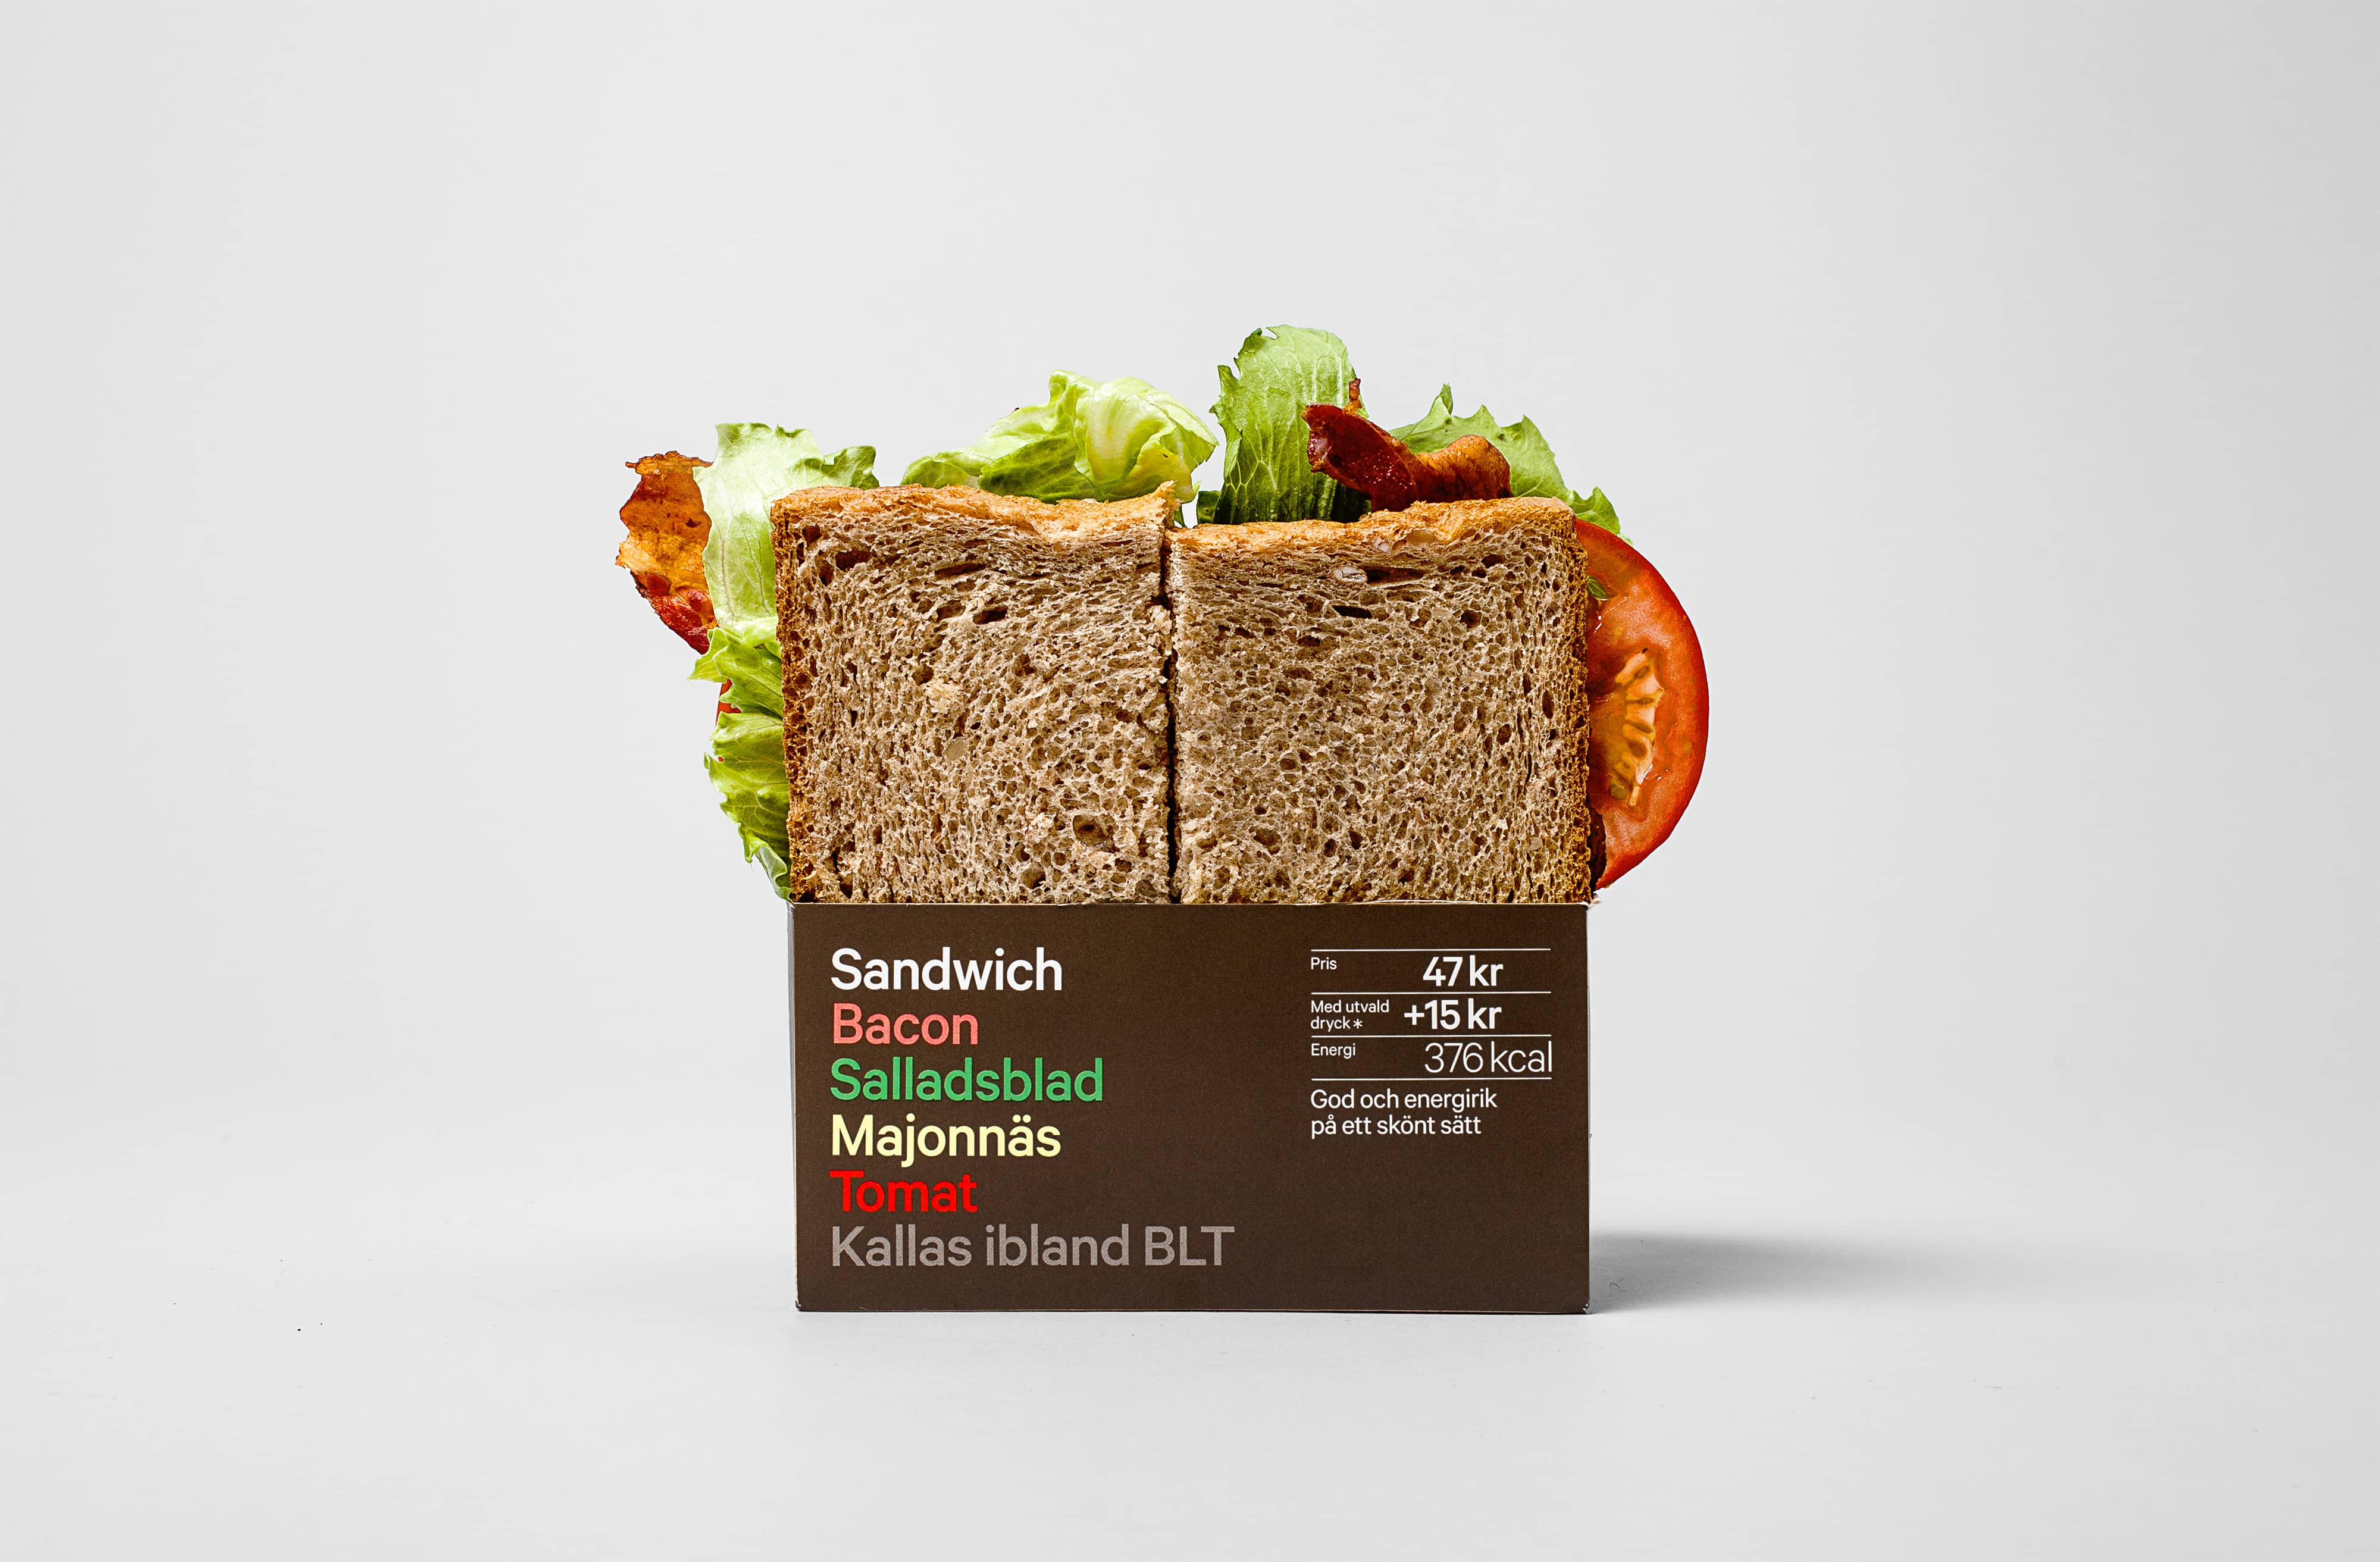 Sandwich packaging designed by BVD for 7-Eleven Sweden